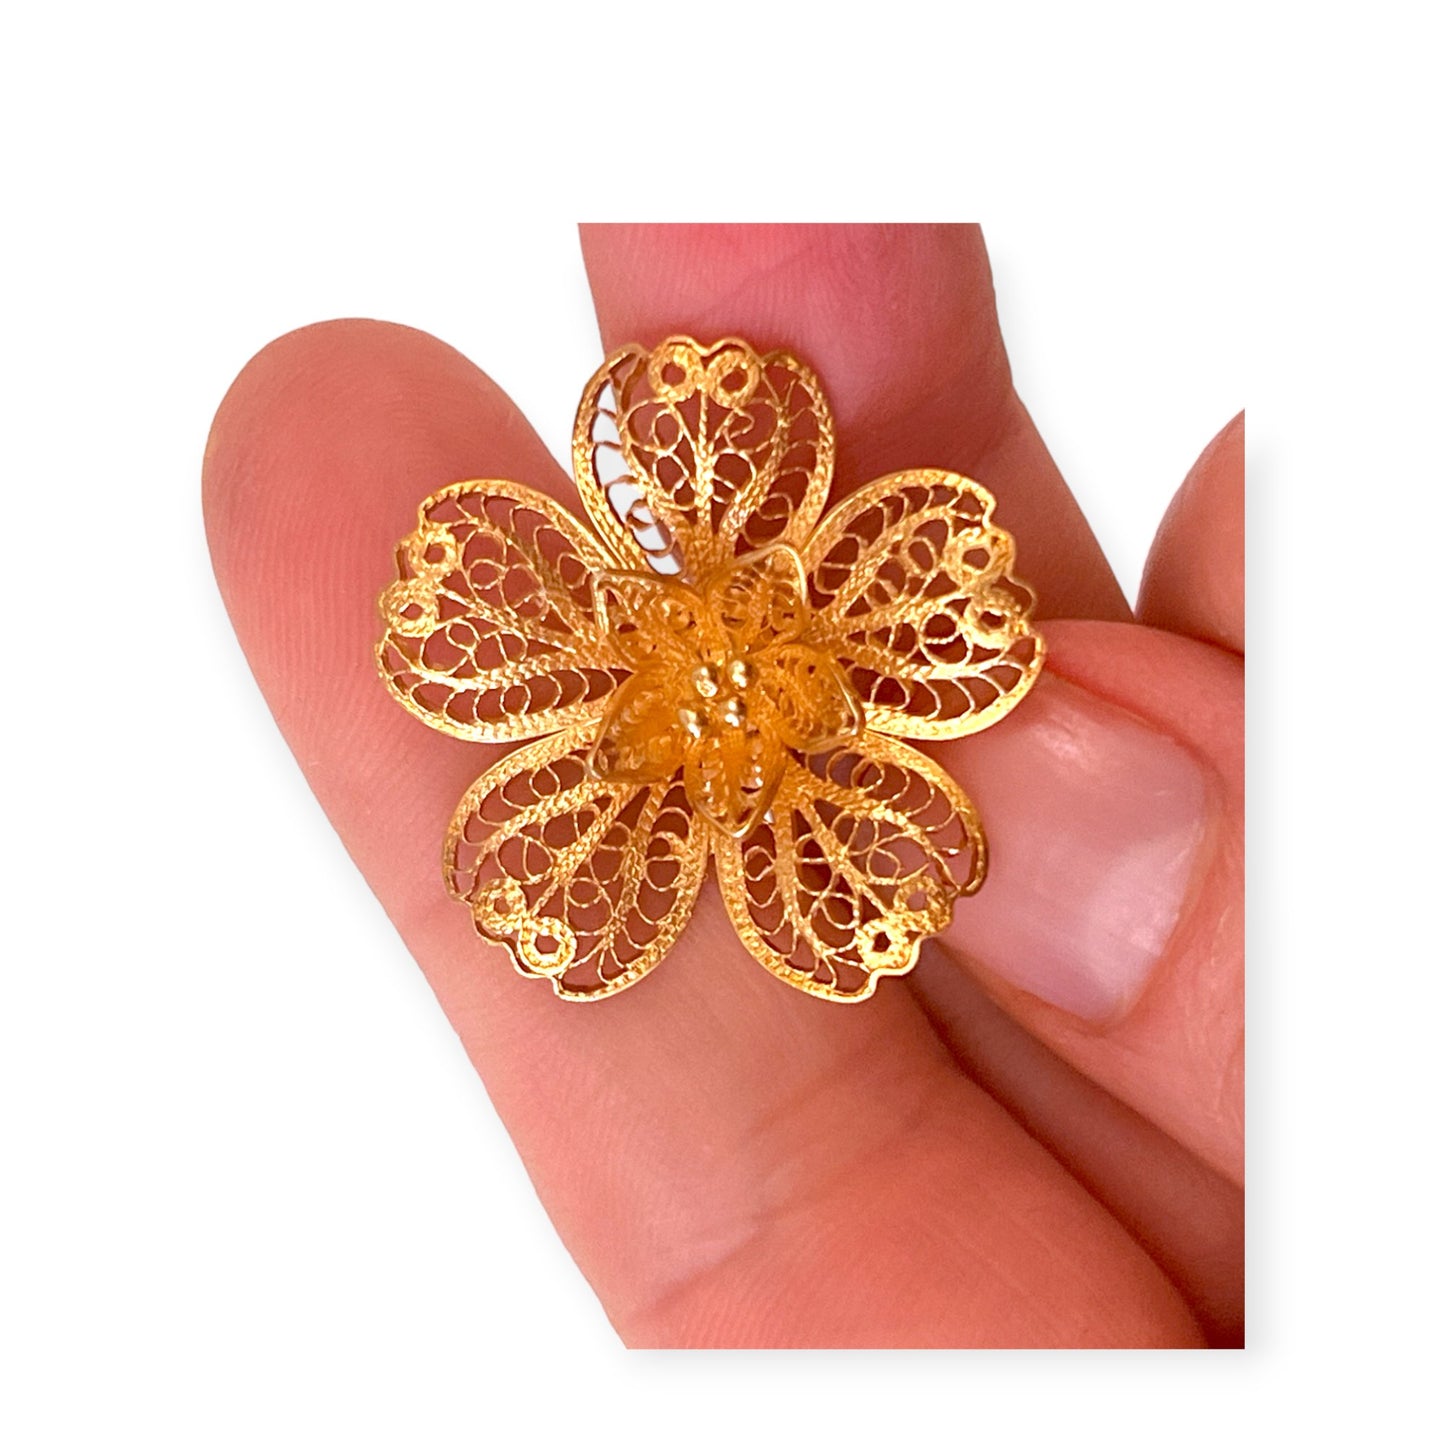 Intricate filigree flower stud earrings - Sundara Joon